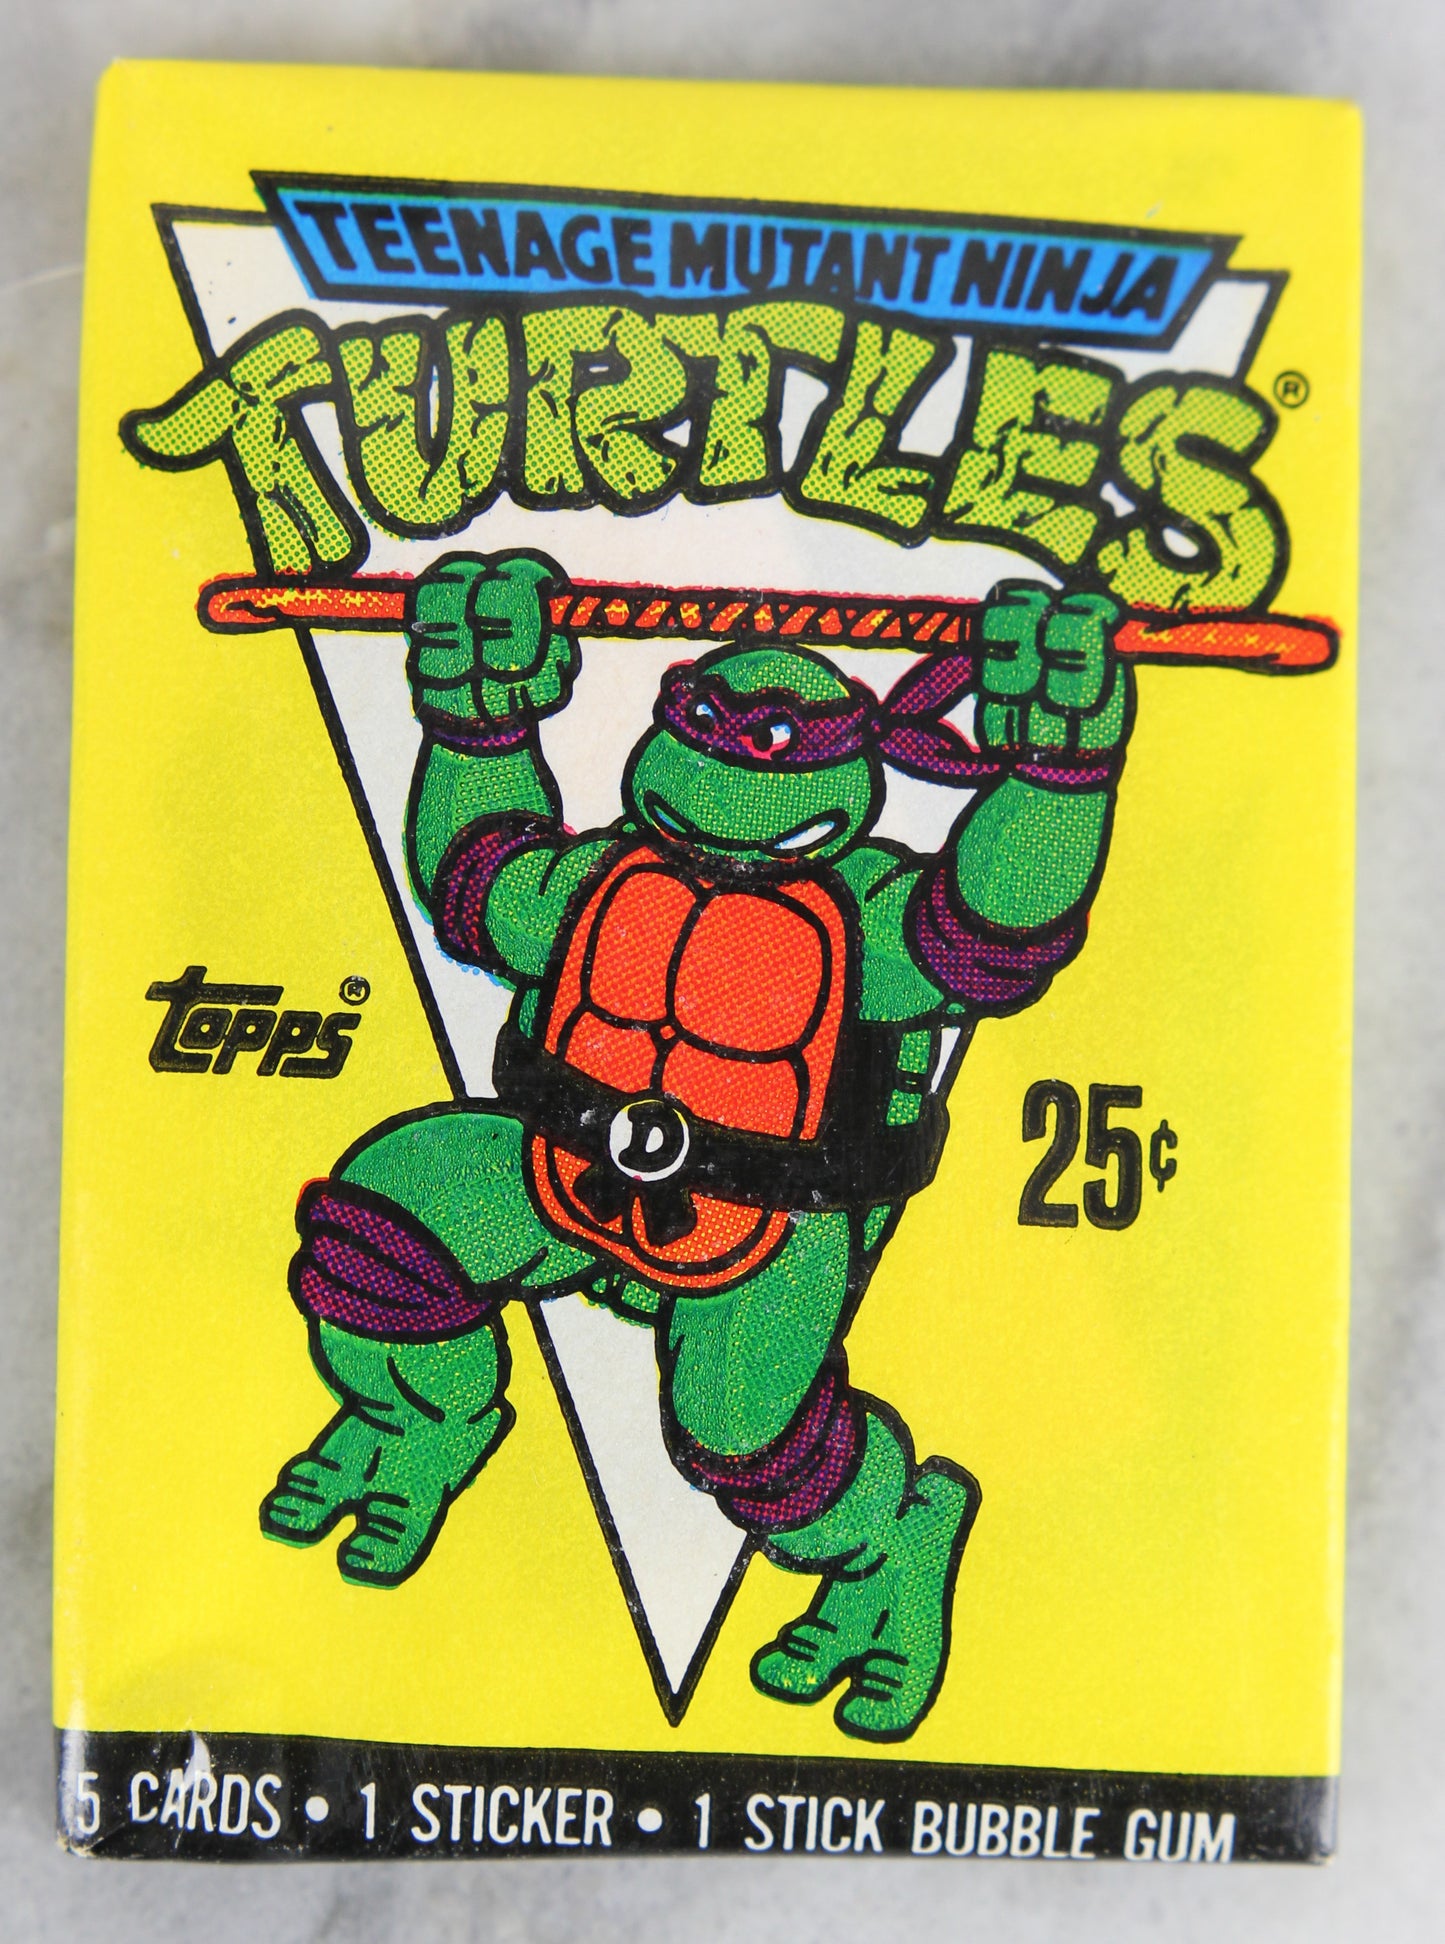 Topps Teenage Mutant Ninja Turtles Trading Cards, 1989 - Four (4) Wax Packs